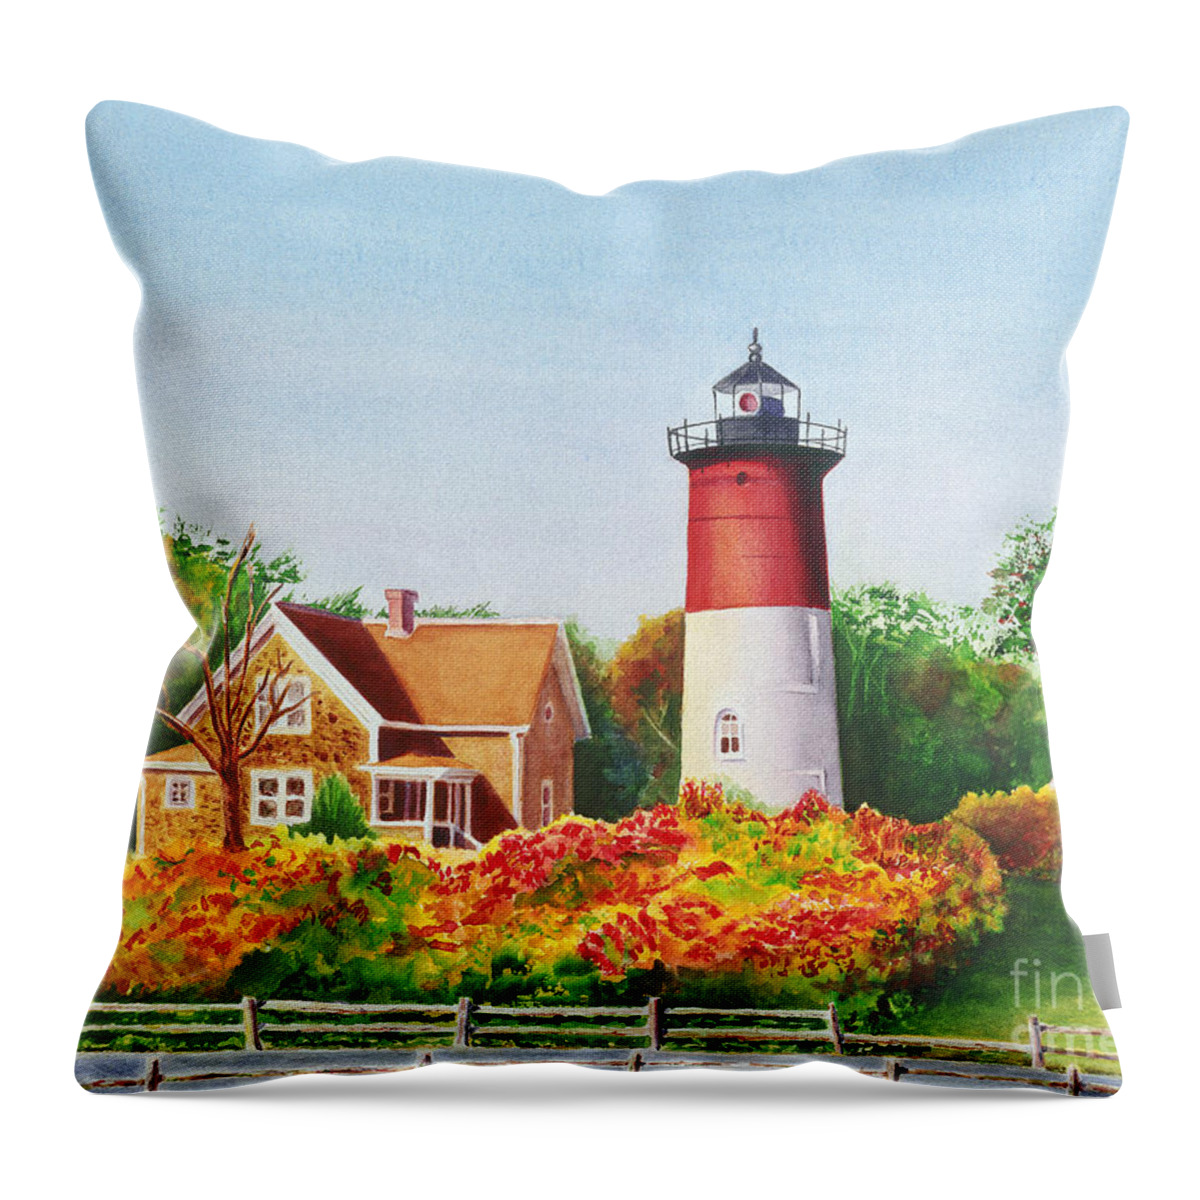 Lighthouse Throw Pillow featuring the painting The Lighthouse by Karen Fleschler